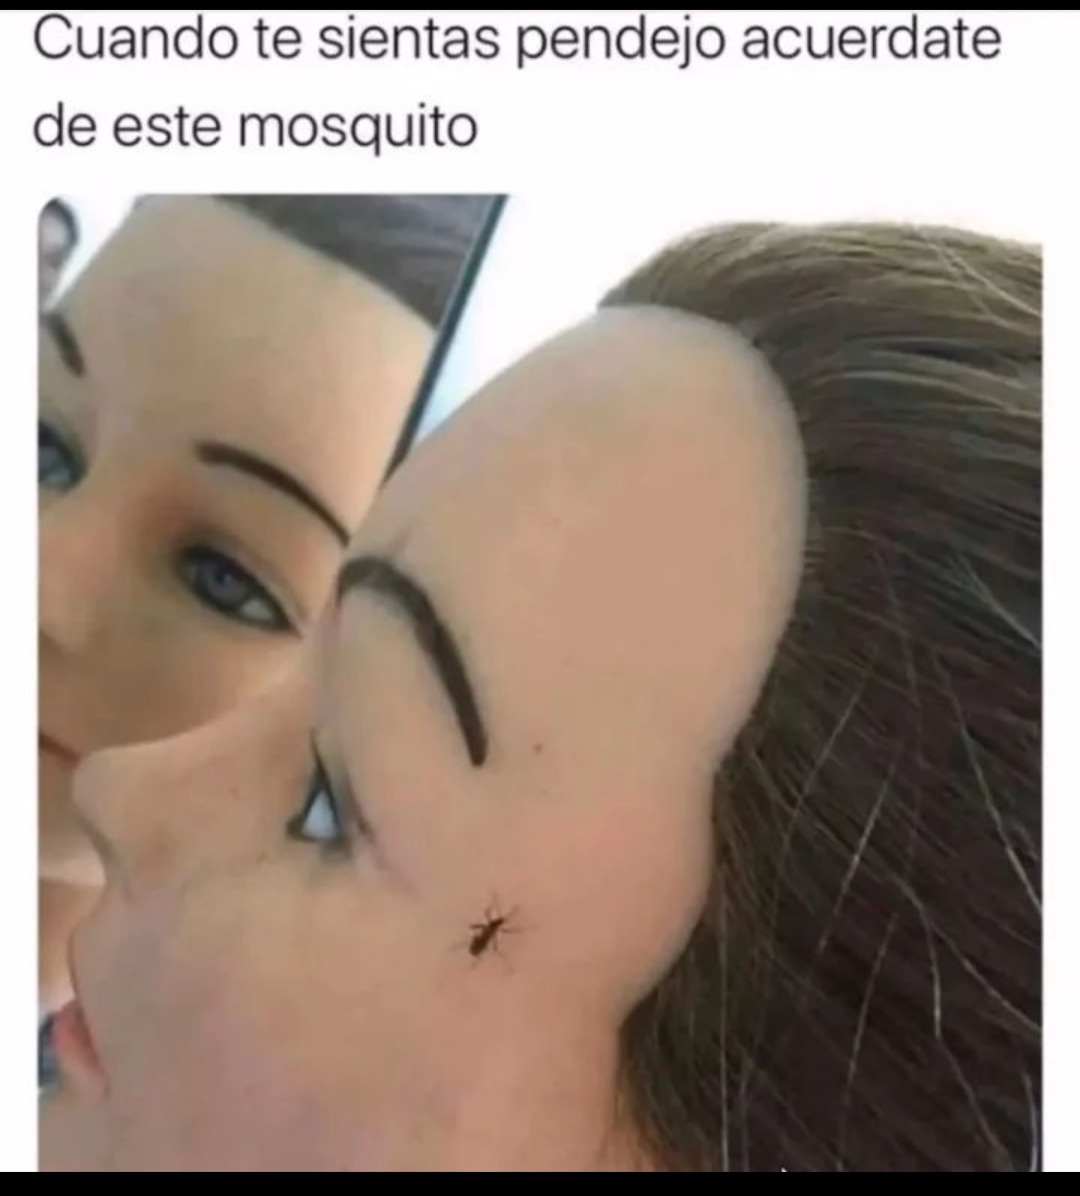 Mosquito nuv - meme